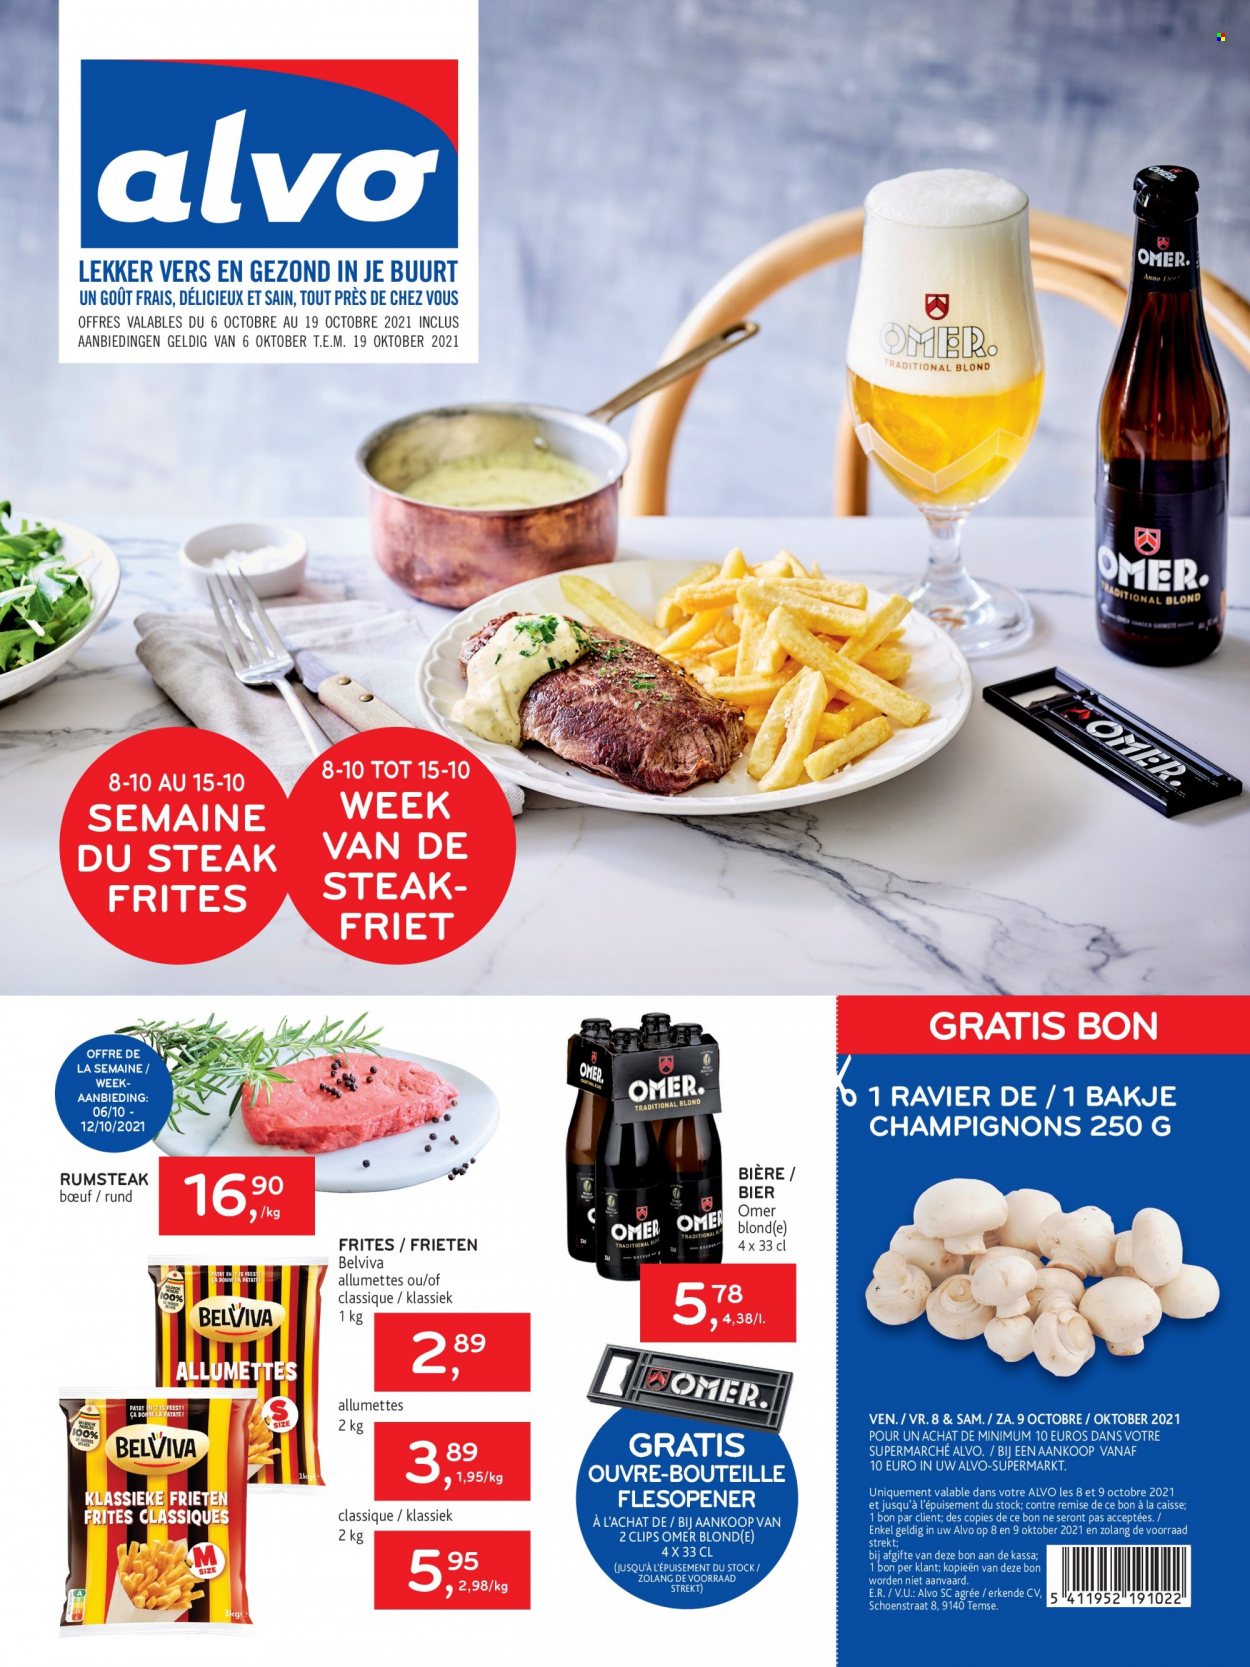 thumbnail - Alvo-aanbieding - 06/10/2021 - 19/10/2021 -  producten in de aanbieding - champignons, steak, bier, frites. Pagina 1.